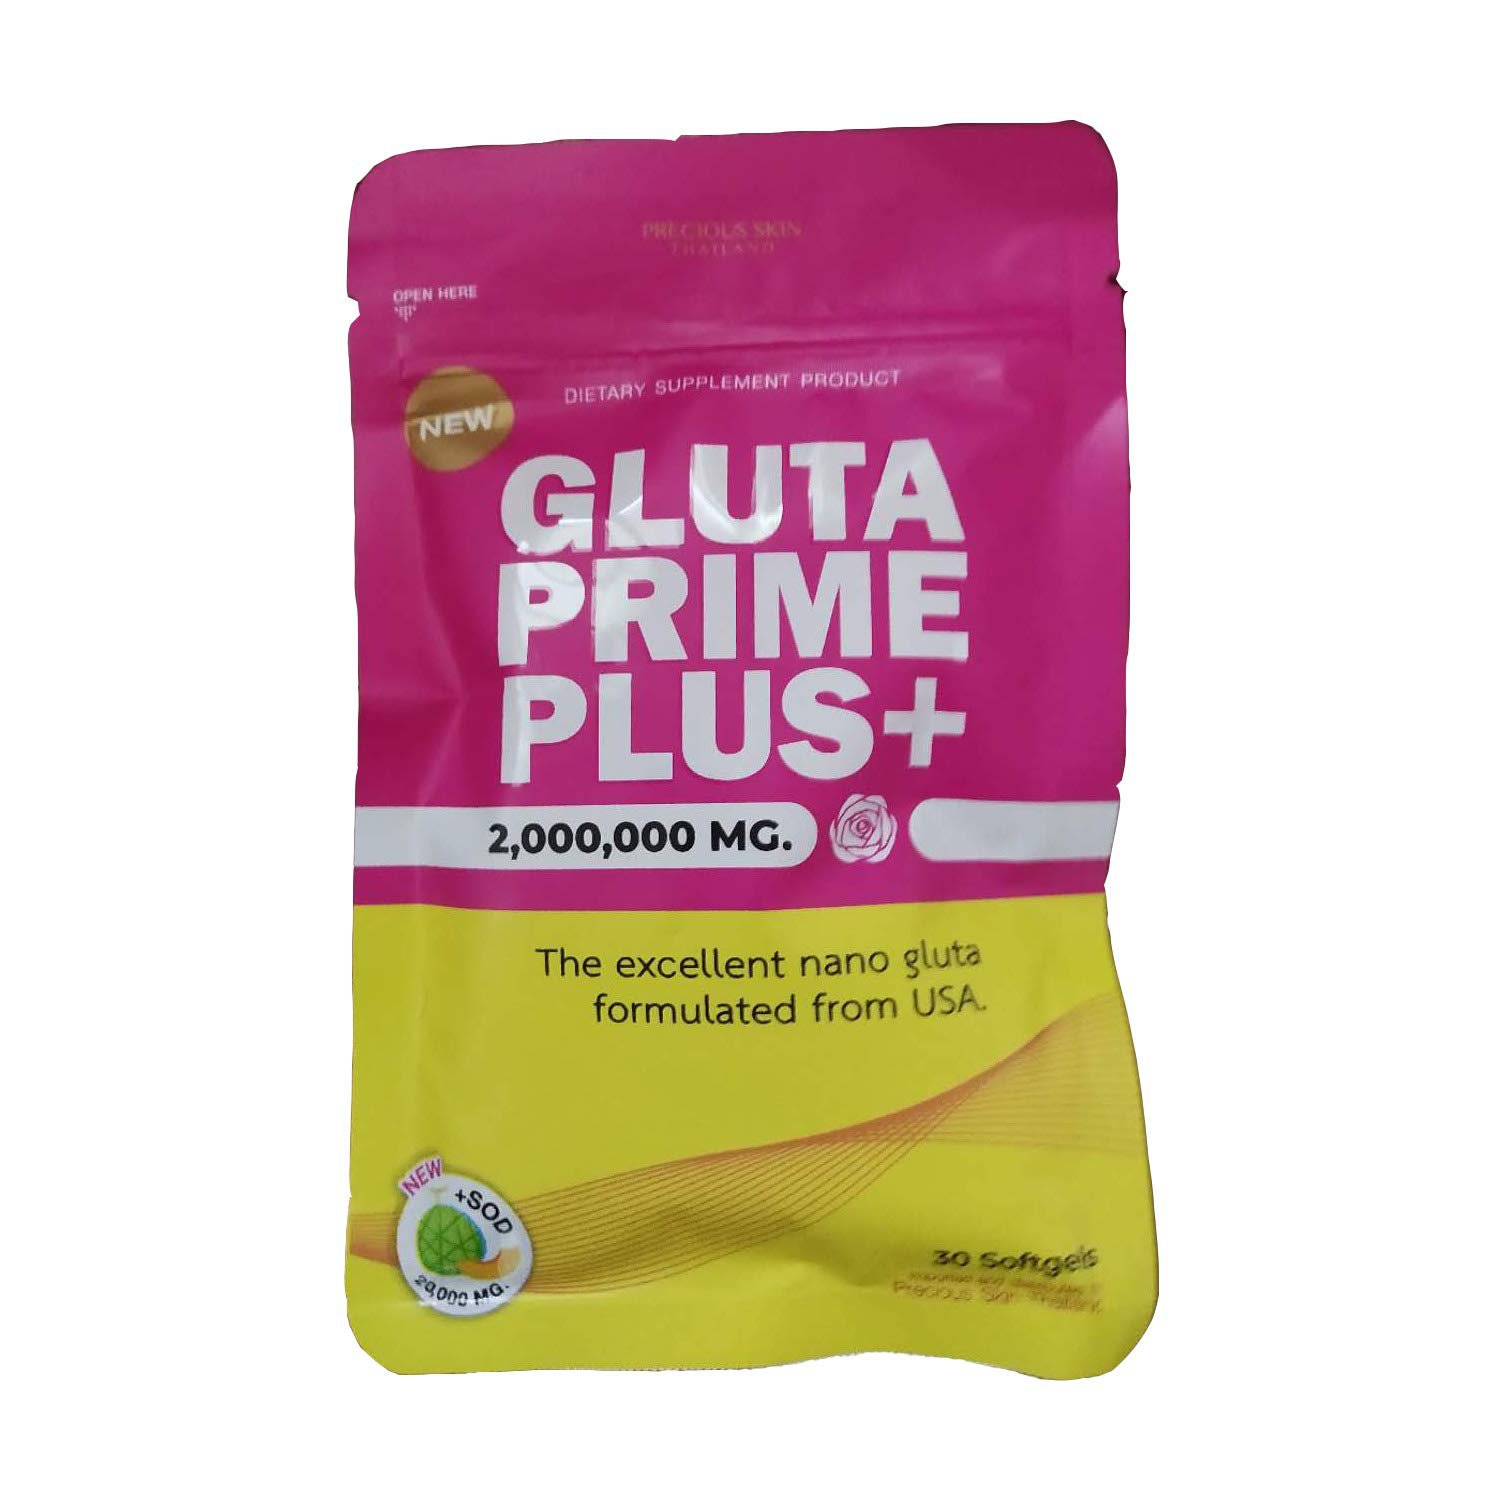 Gluta Prime Plus SOD 2000000mg Whitening Anti Aging 30 Softgels